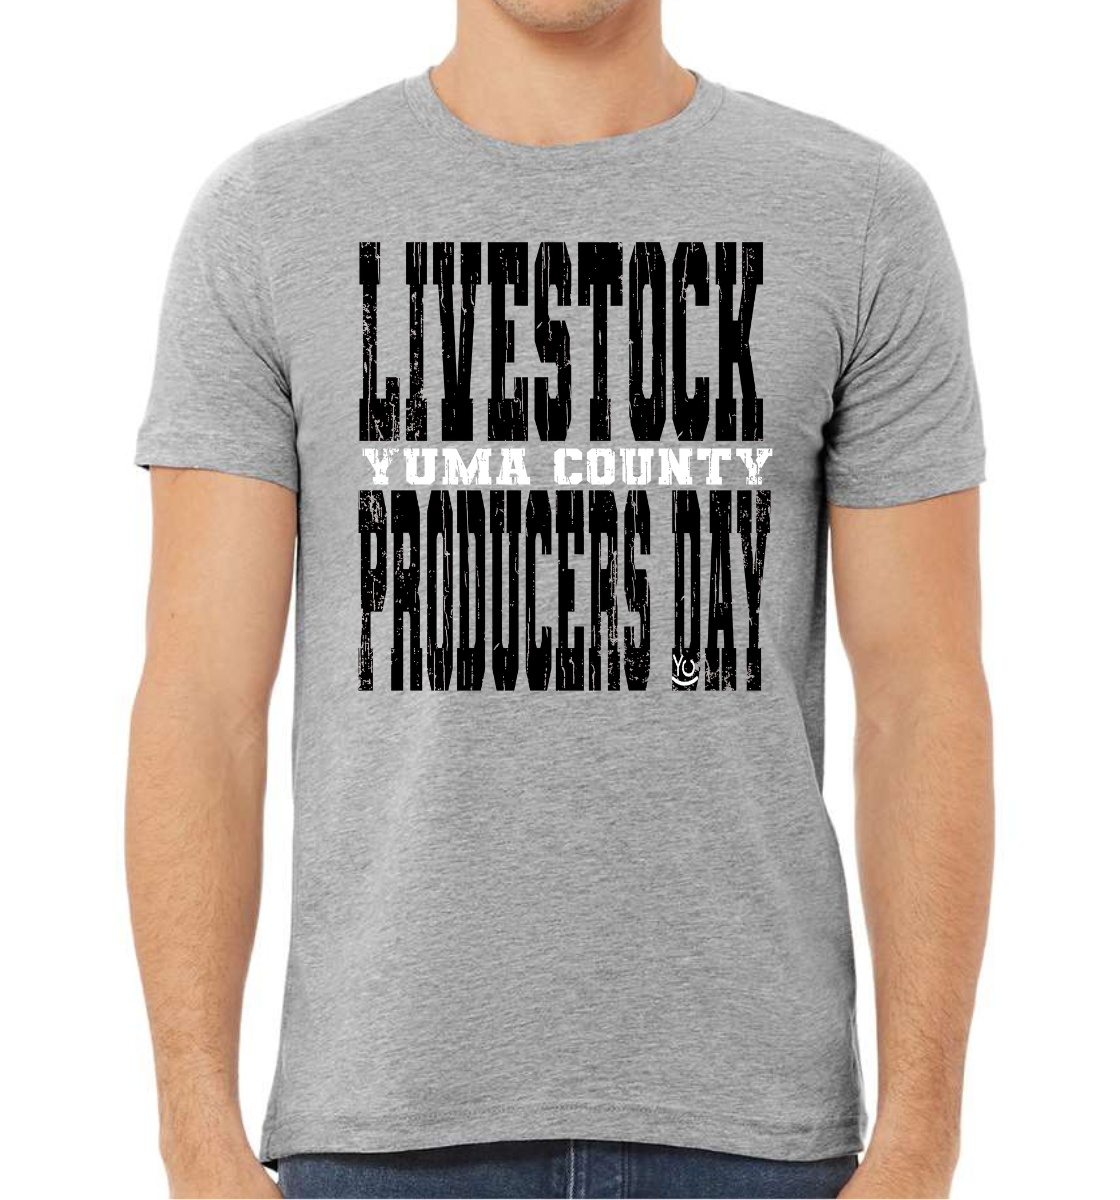 yuma county livestock producers day unisex tee shirt - yuma county ag week!